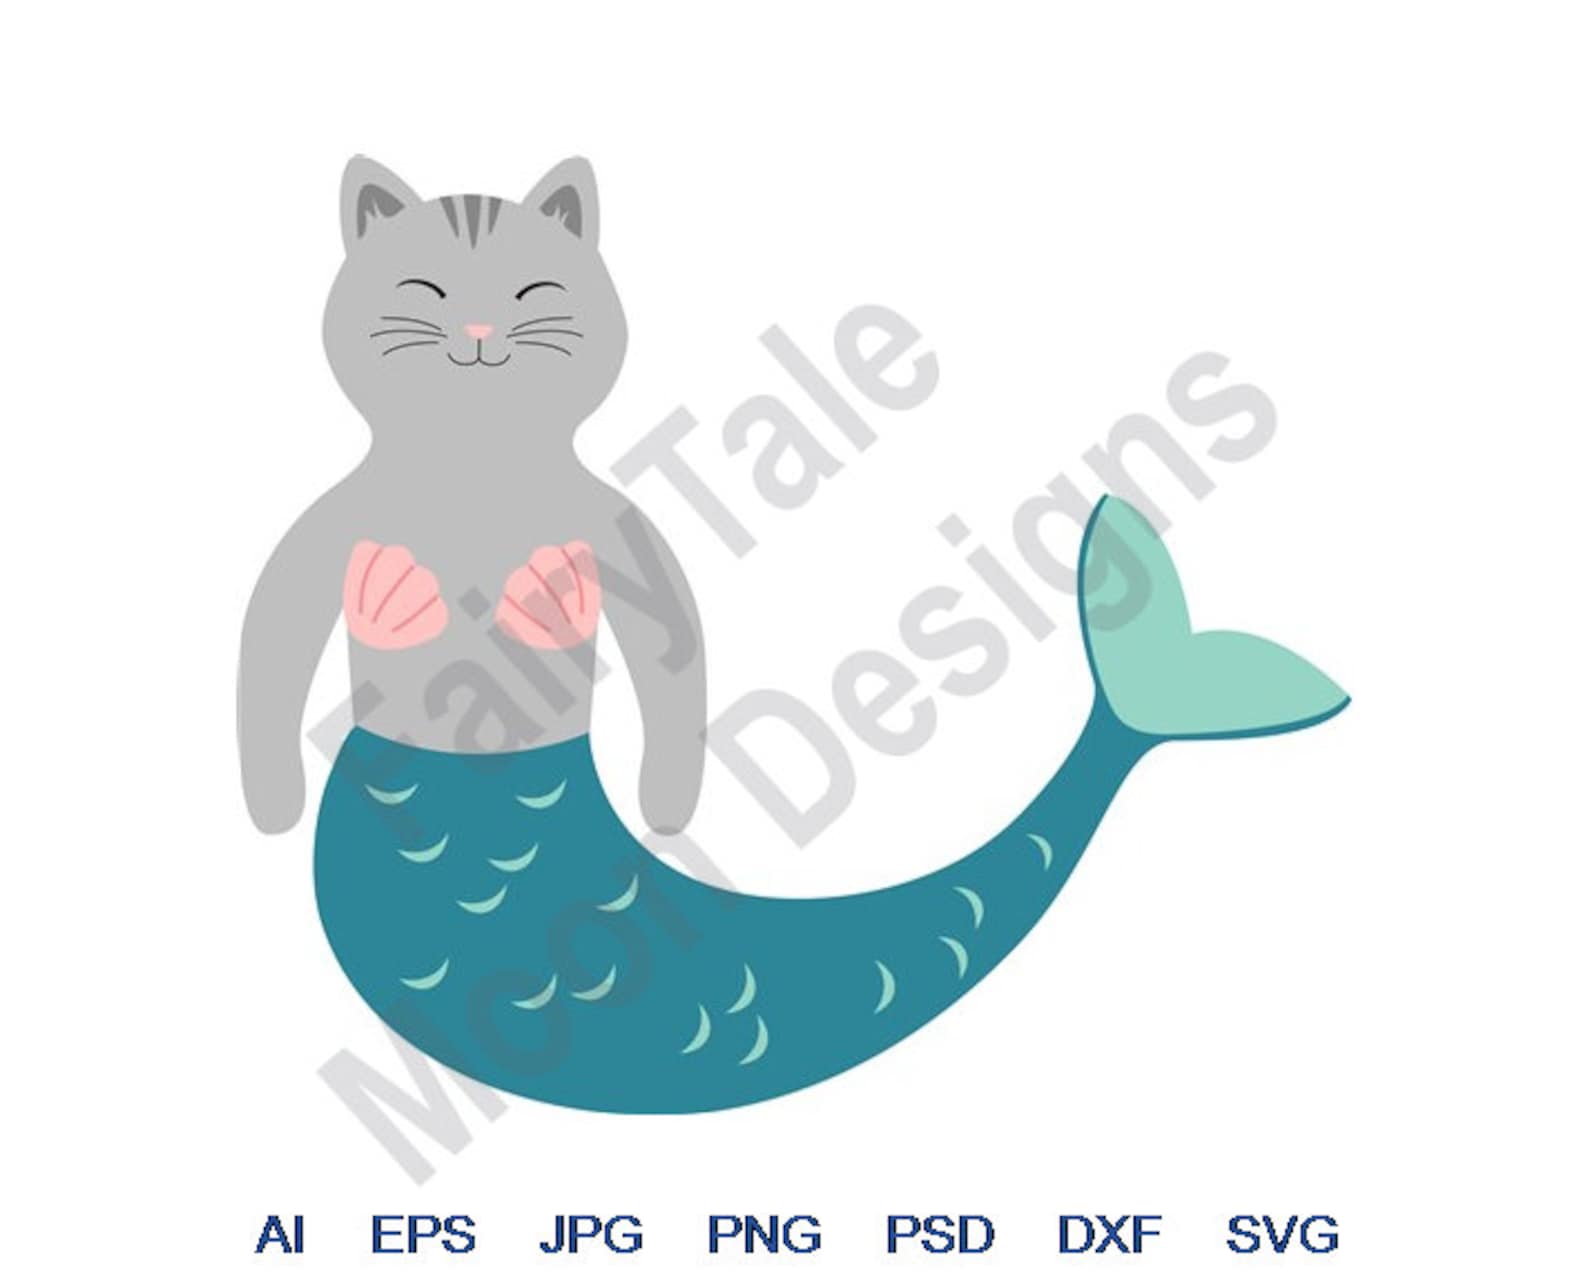 Mermaid Cat Svg Dxf Eps Png Jpg Vector Art Clipart | Etsy